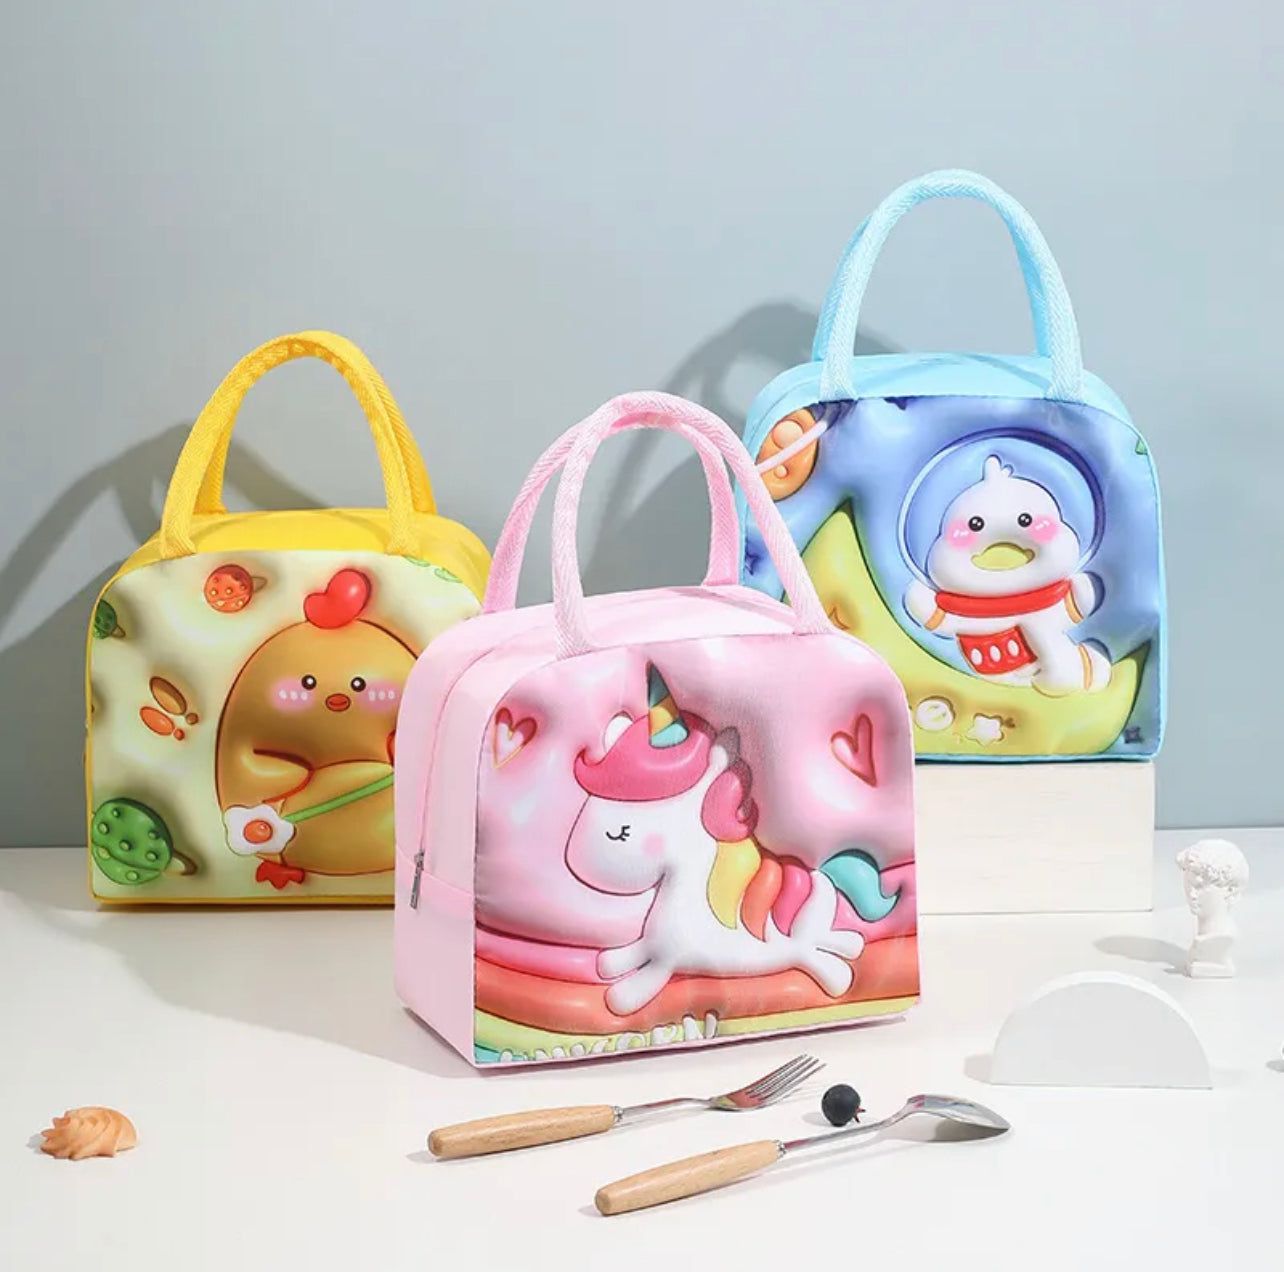 Embossed Style Cute Lunchbags